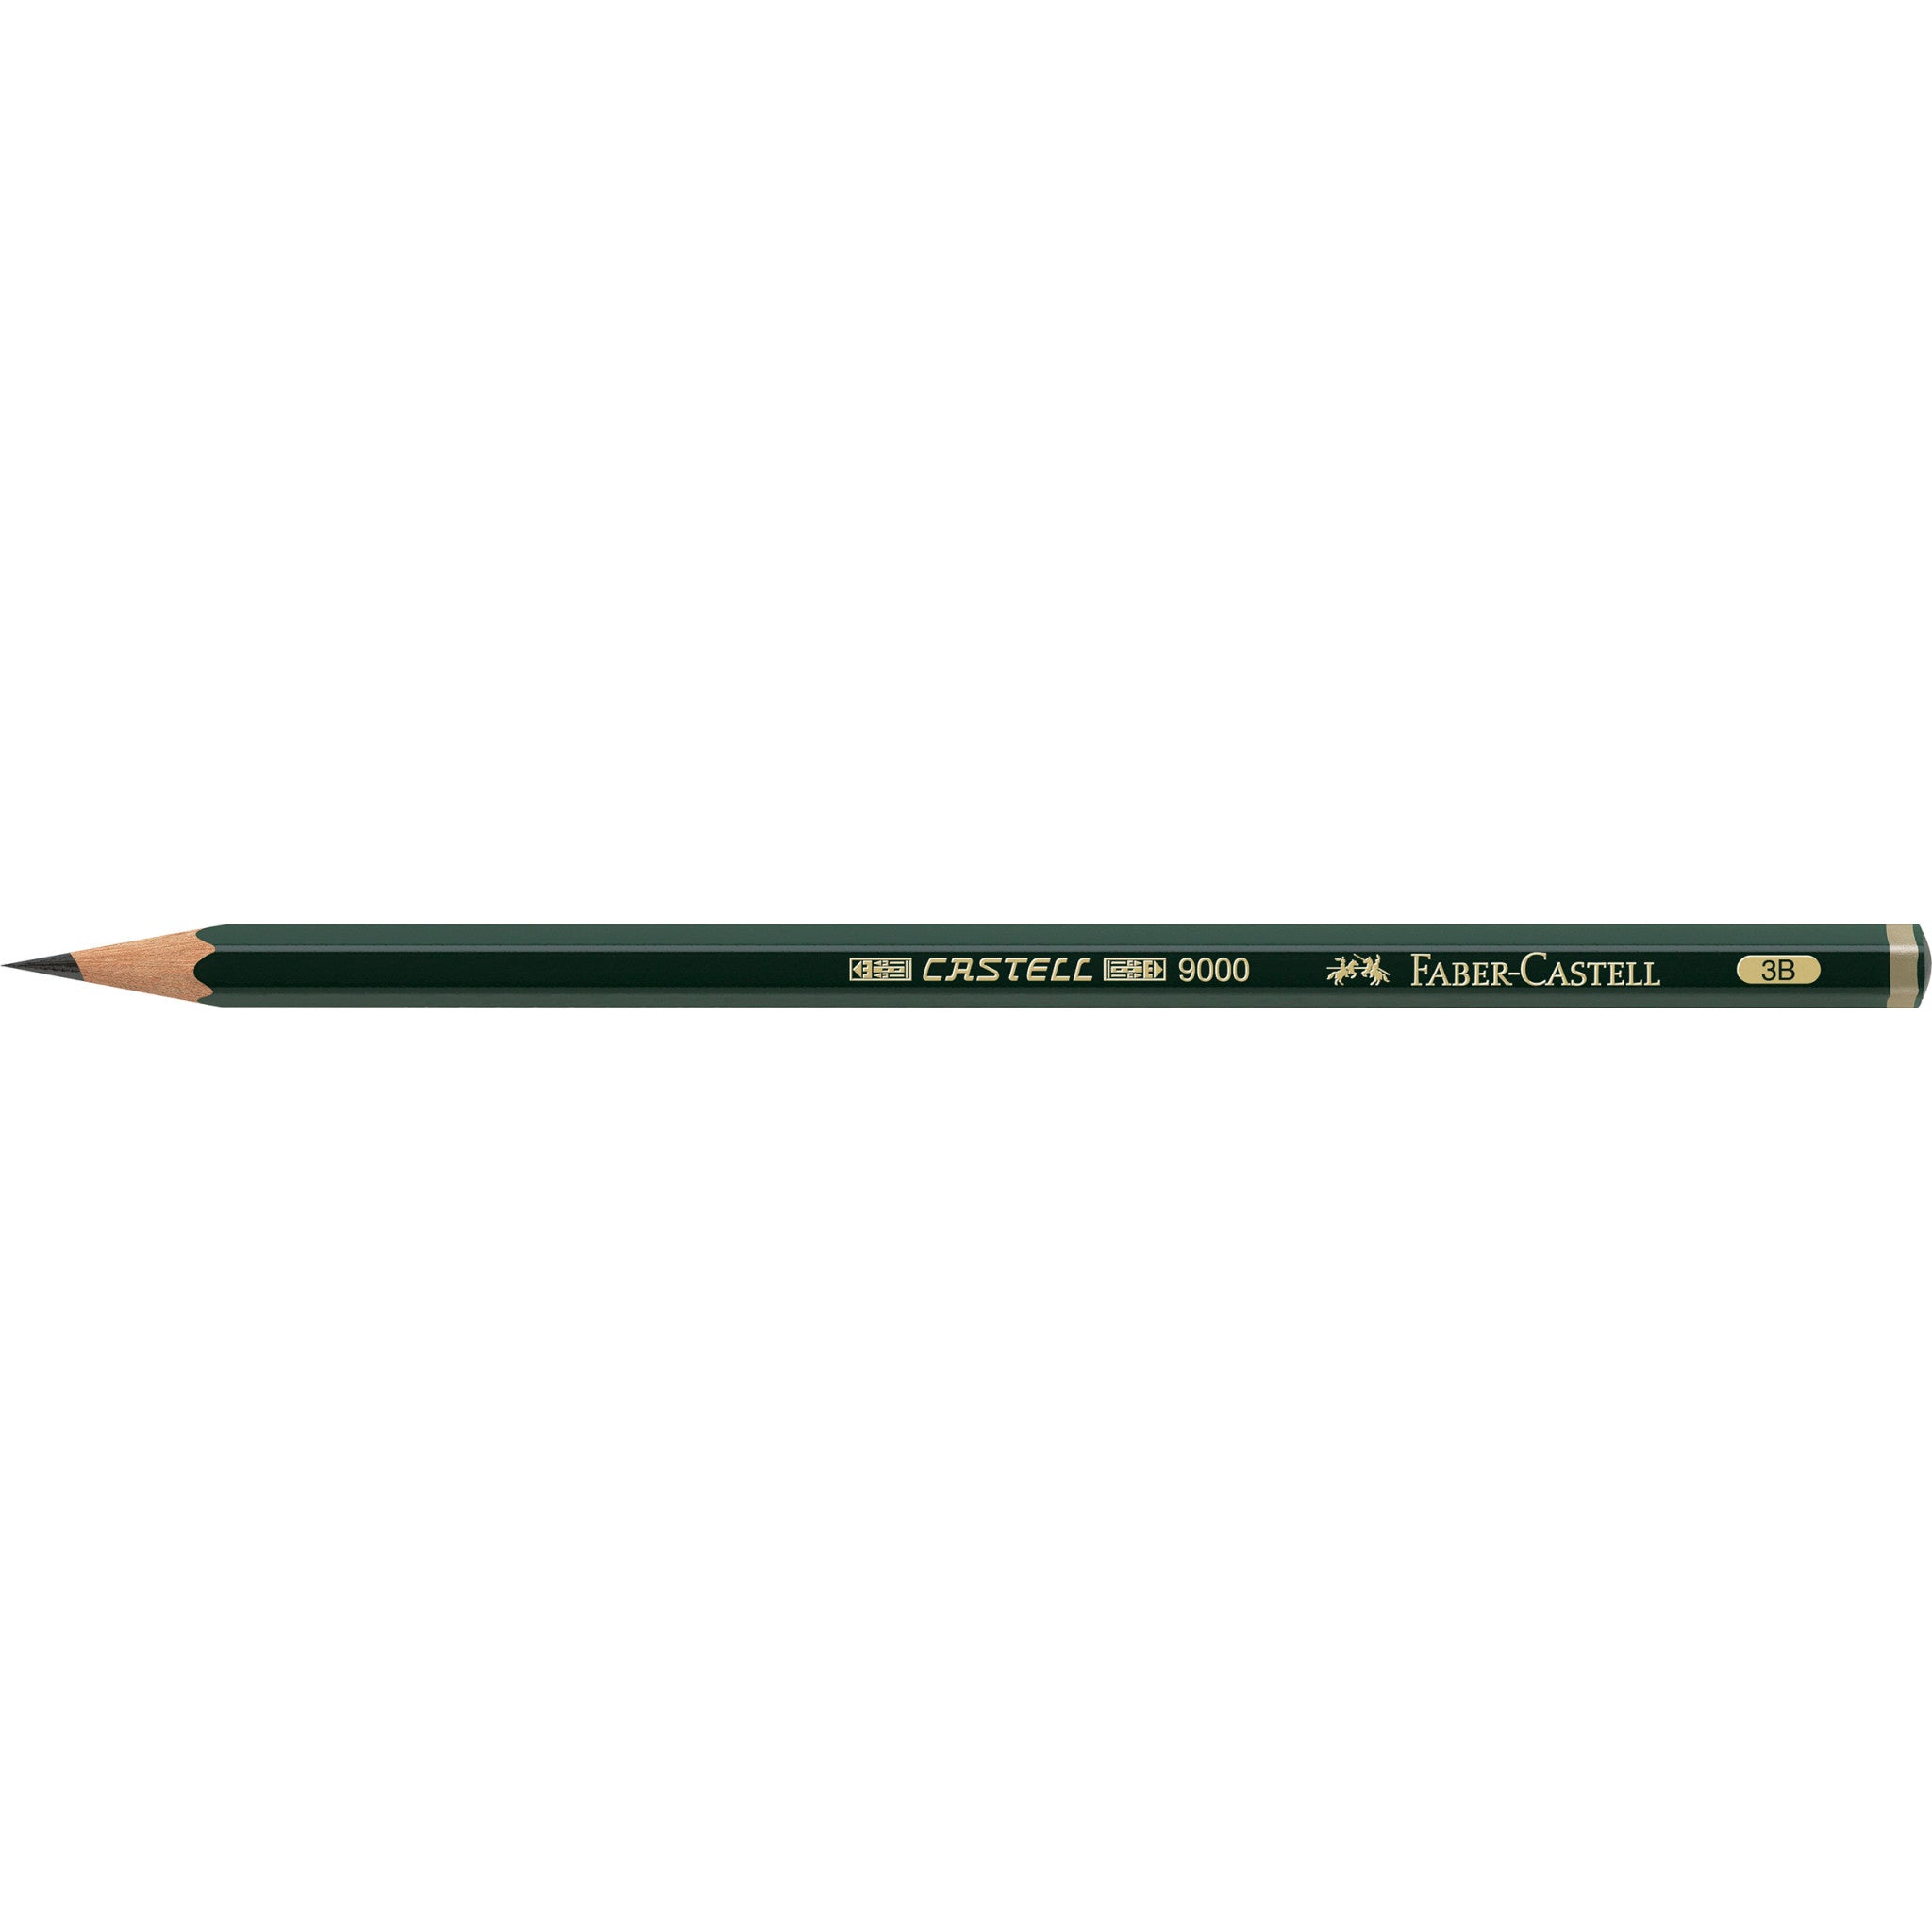 3b pencil lead